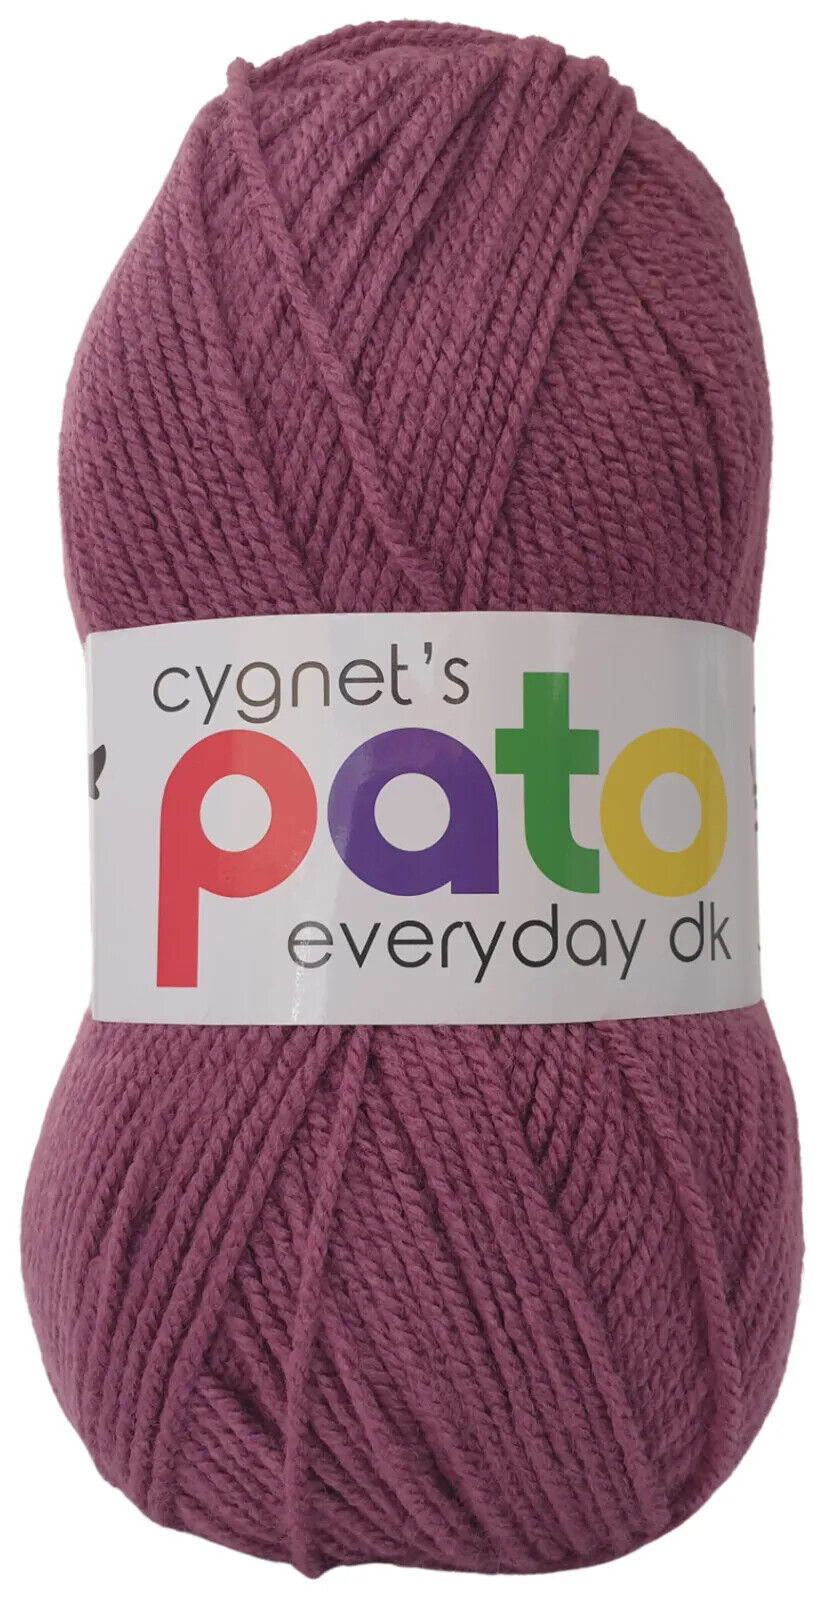 Cygnet Pato DK Knitting Wool / Yarn 100 gram ball - Mulberry - 948